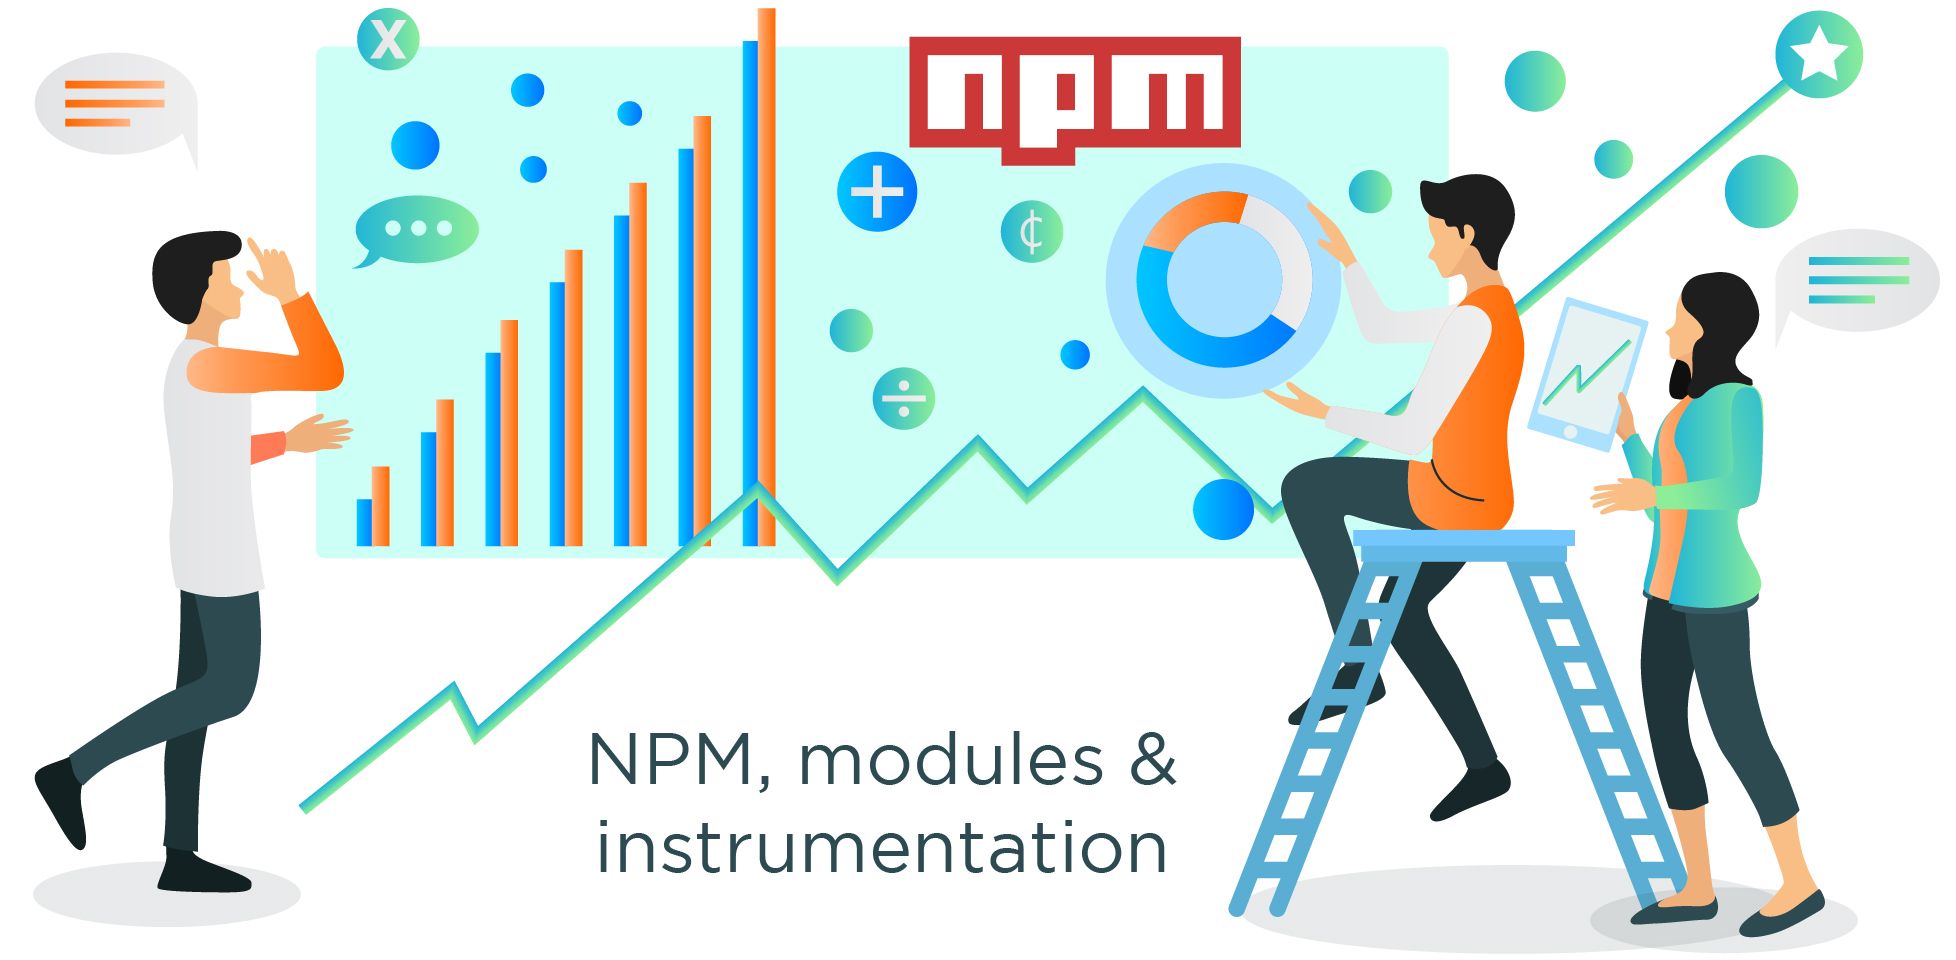 NPM, modules & instrumentation